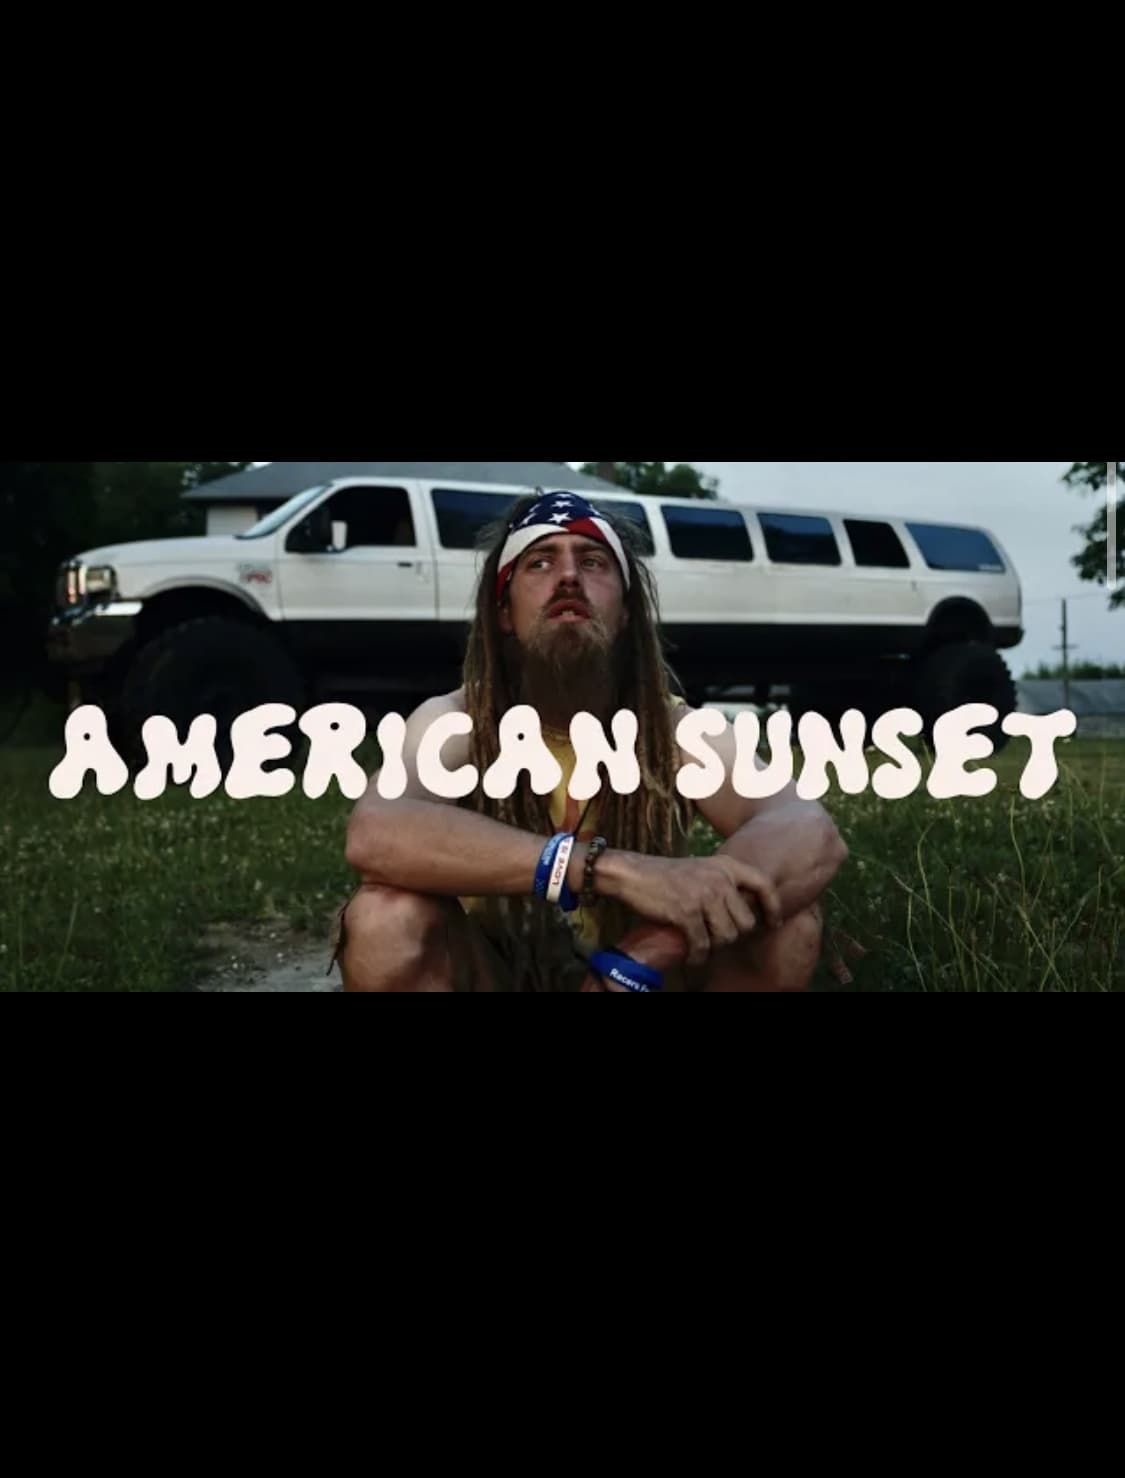 American Sunset